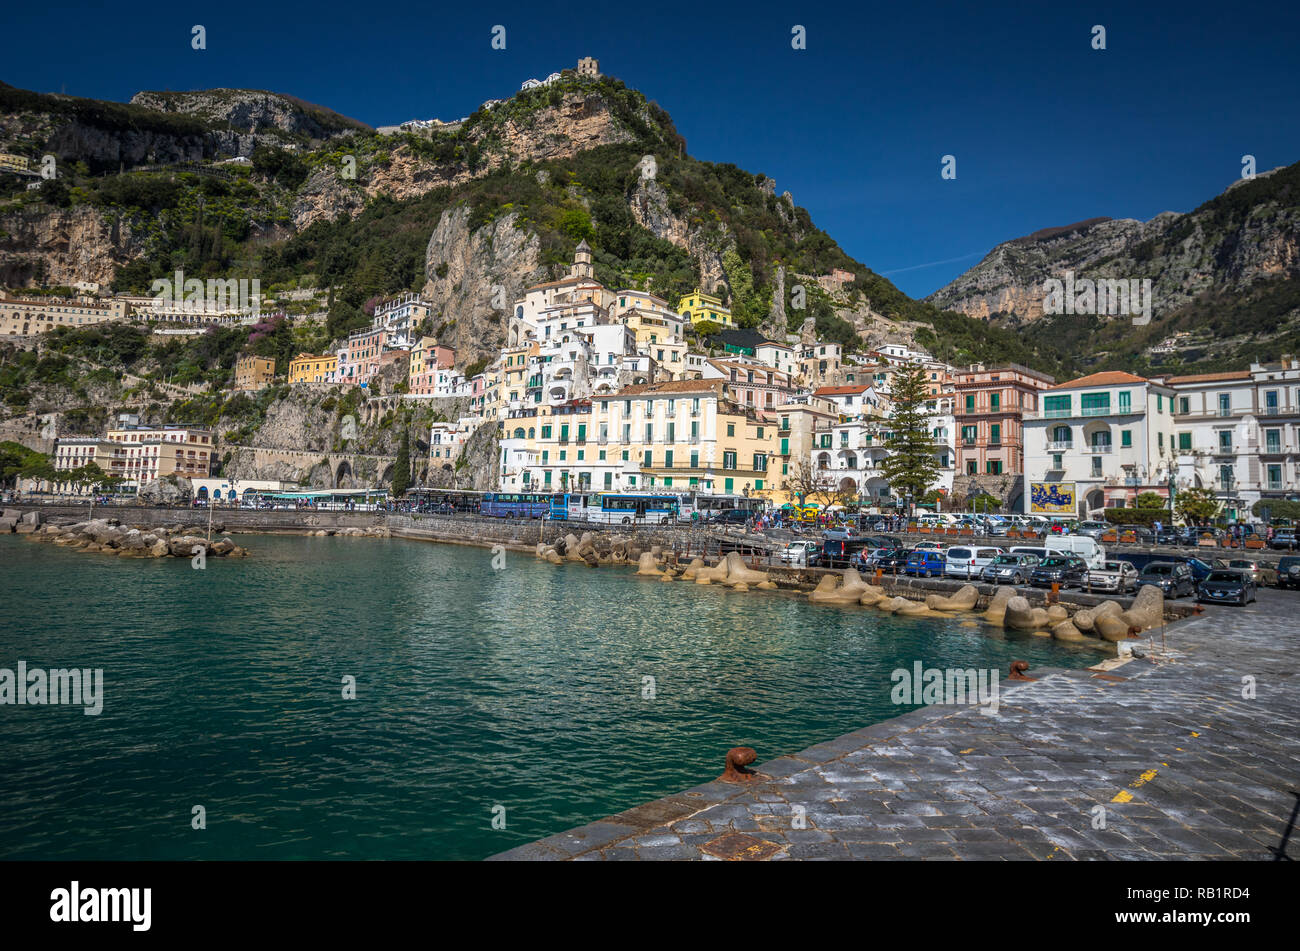 Nice town of Amalfi Stock Photo